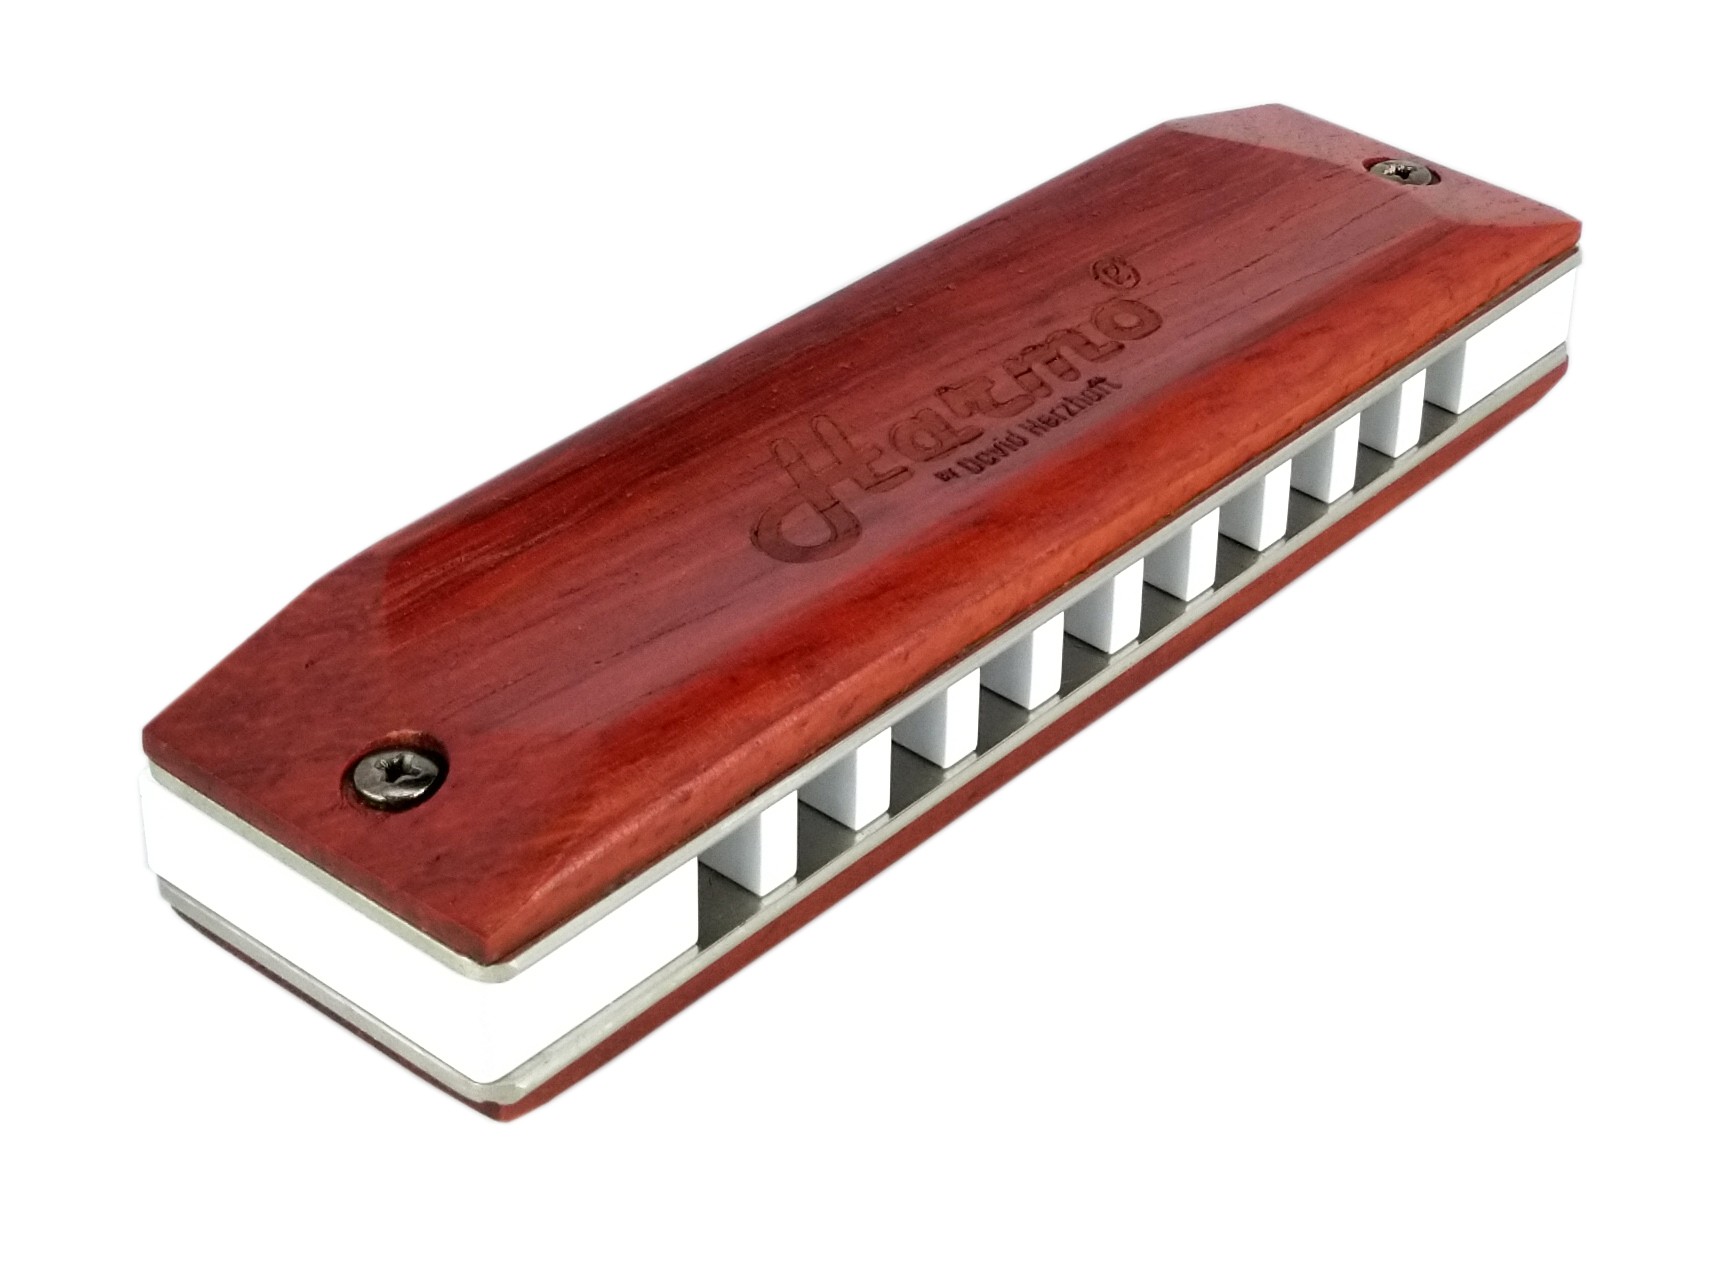 Walnut harmonica for beginners